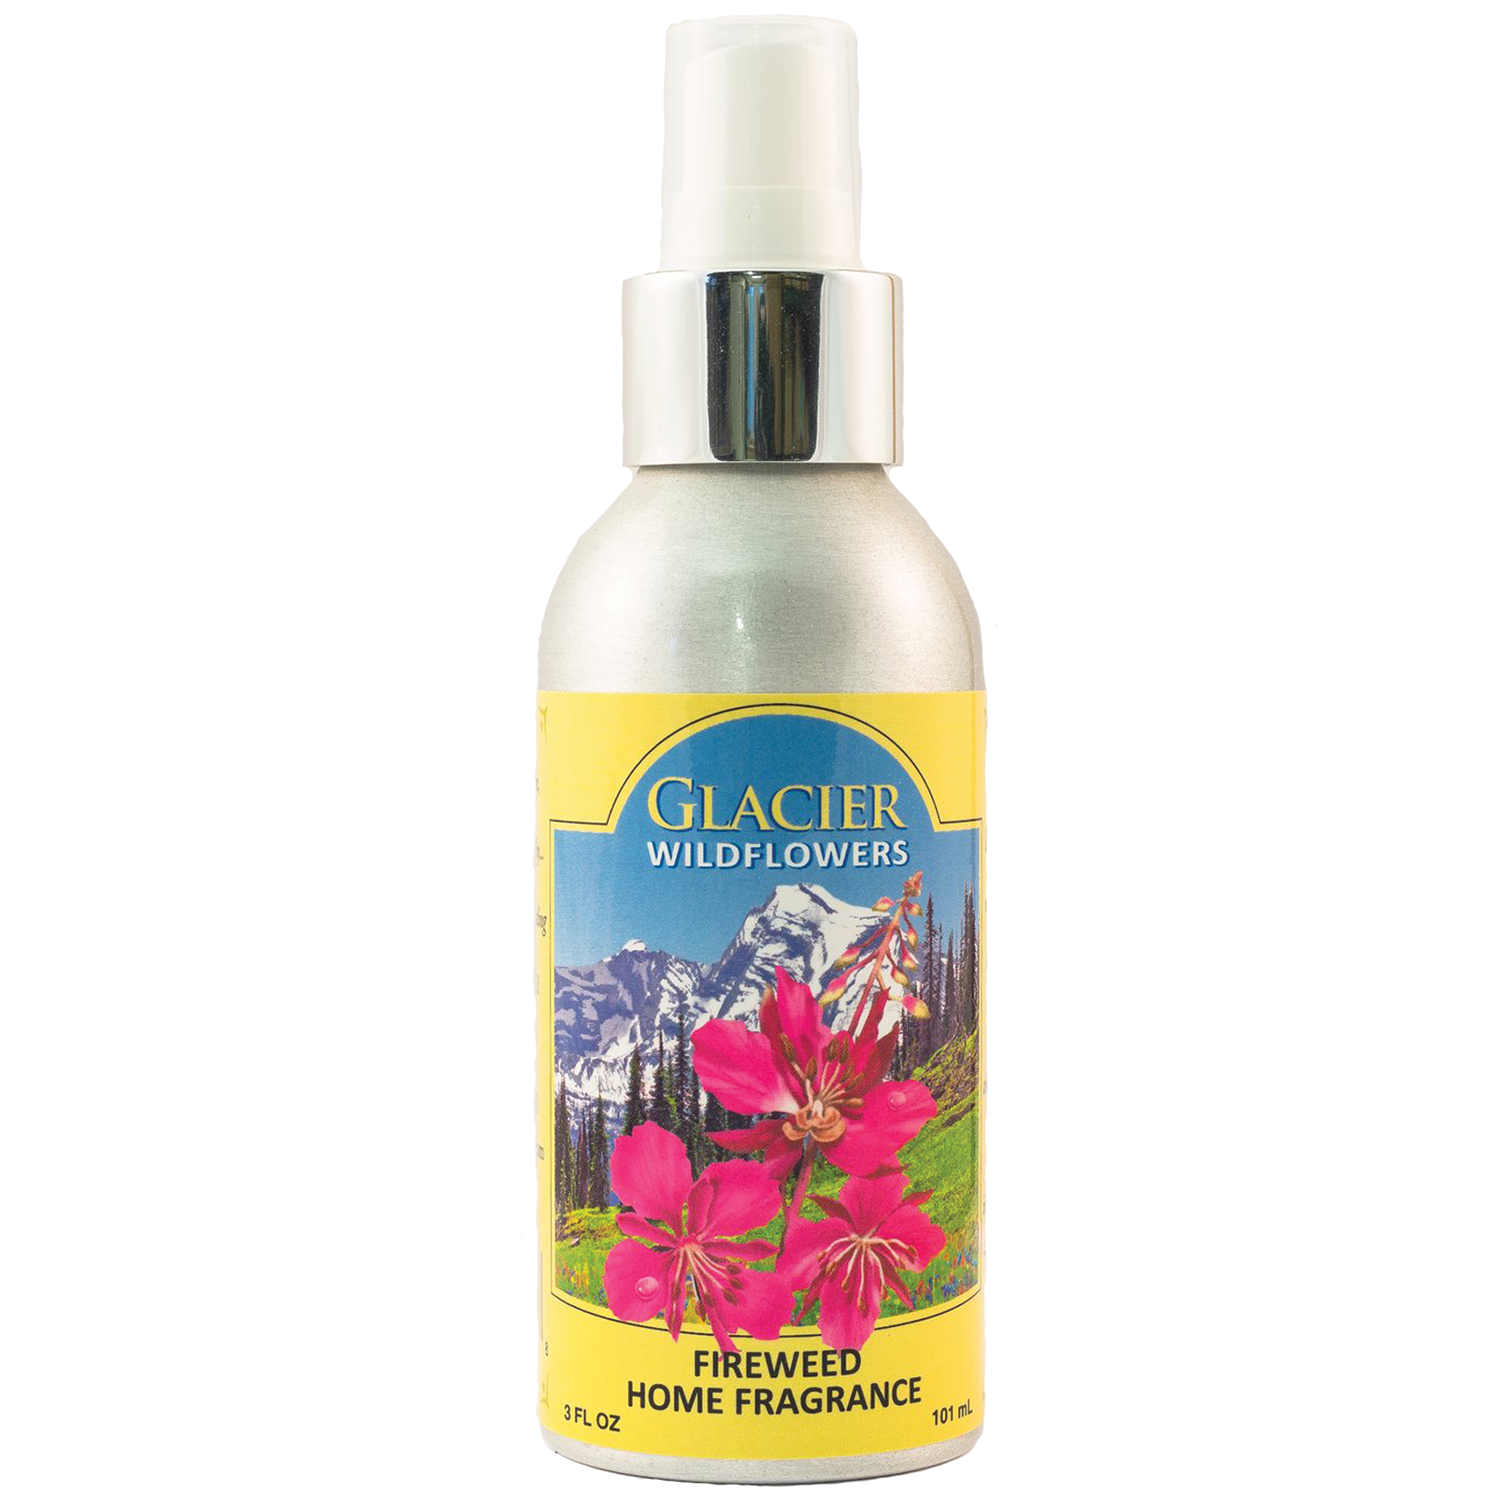 Glacier Fireweed Home Fragrance